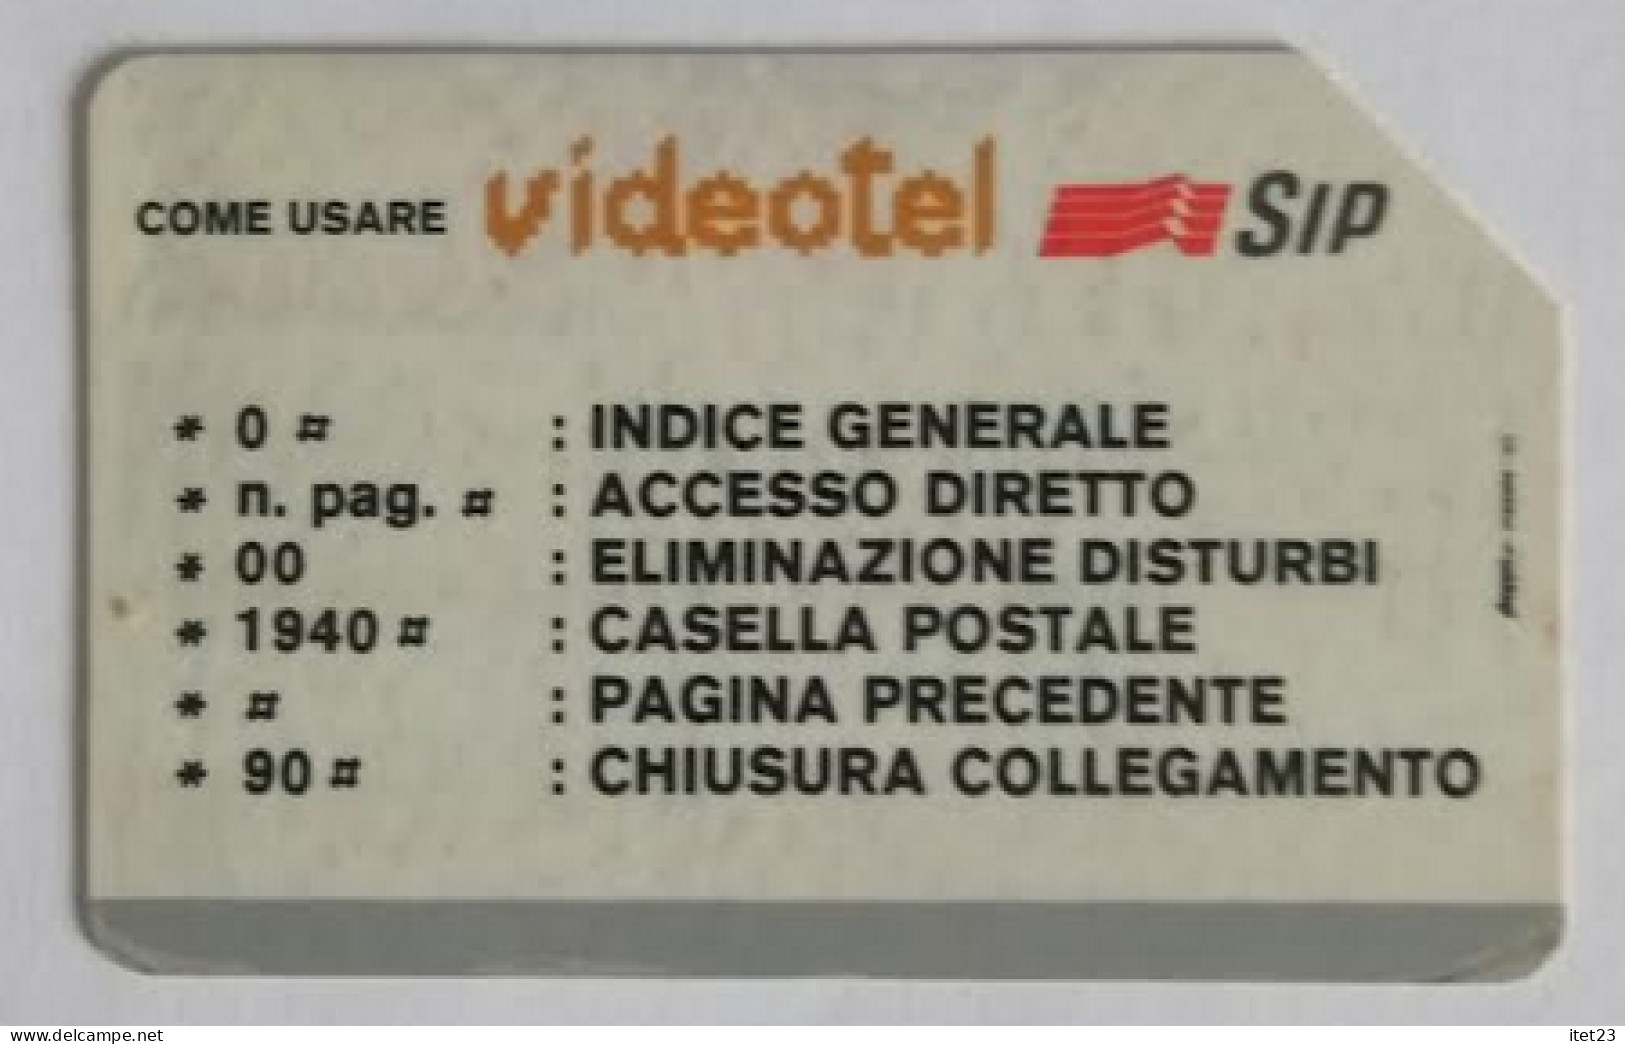 SCHEDA TELEFONICA ITALIANA - USI SPECIALI  VIDEOTEL SIP- C&C 4009 - [4] Colecciones